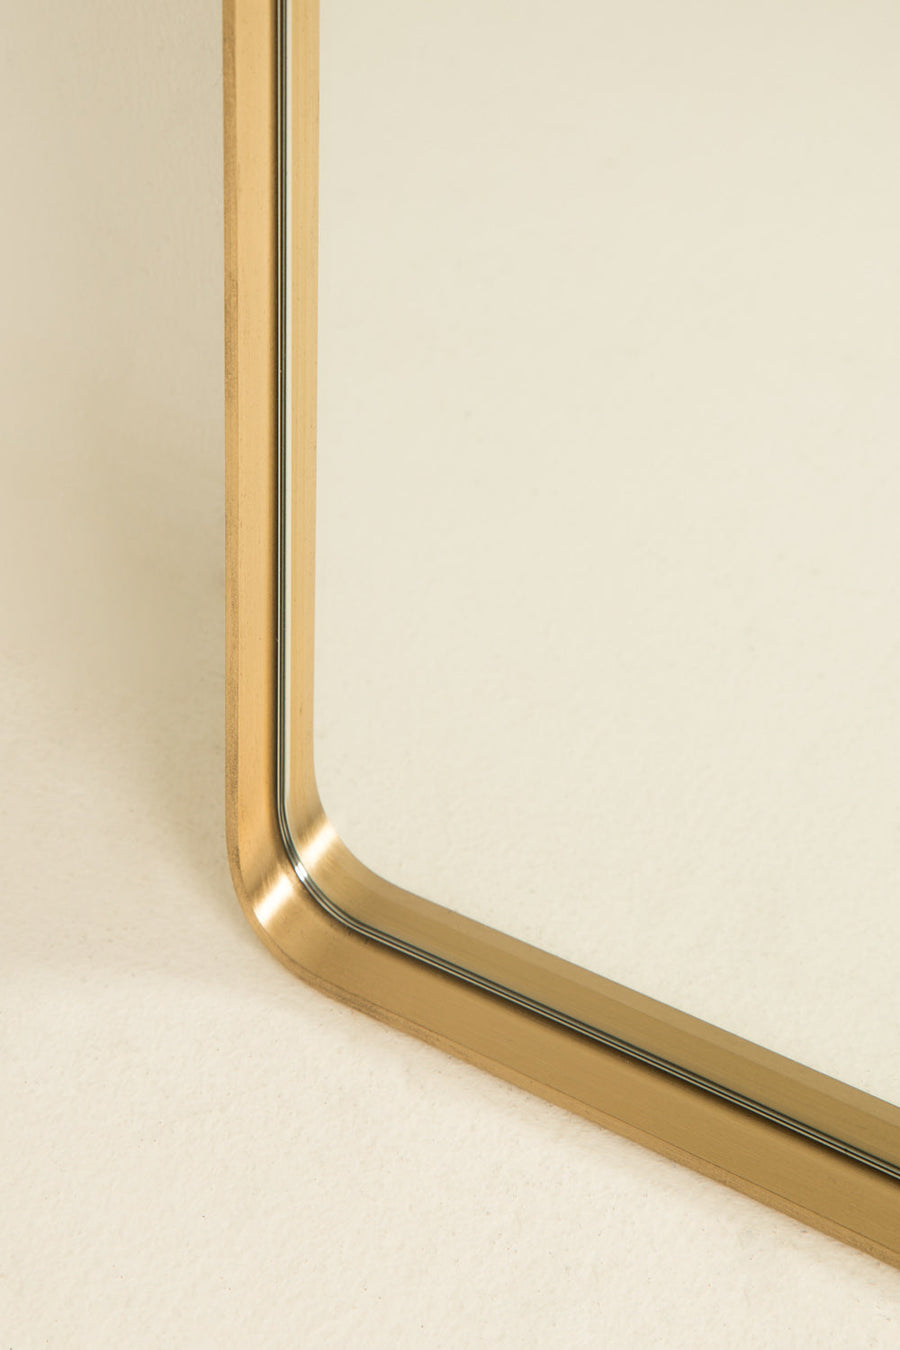 Here Mirror Sample - 500 x 1200mm - Aged Brass